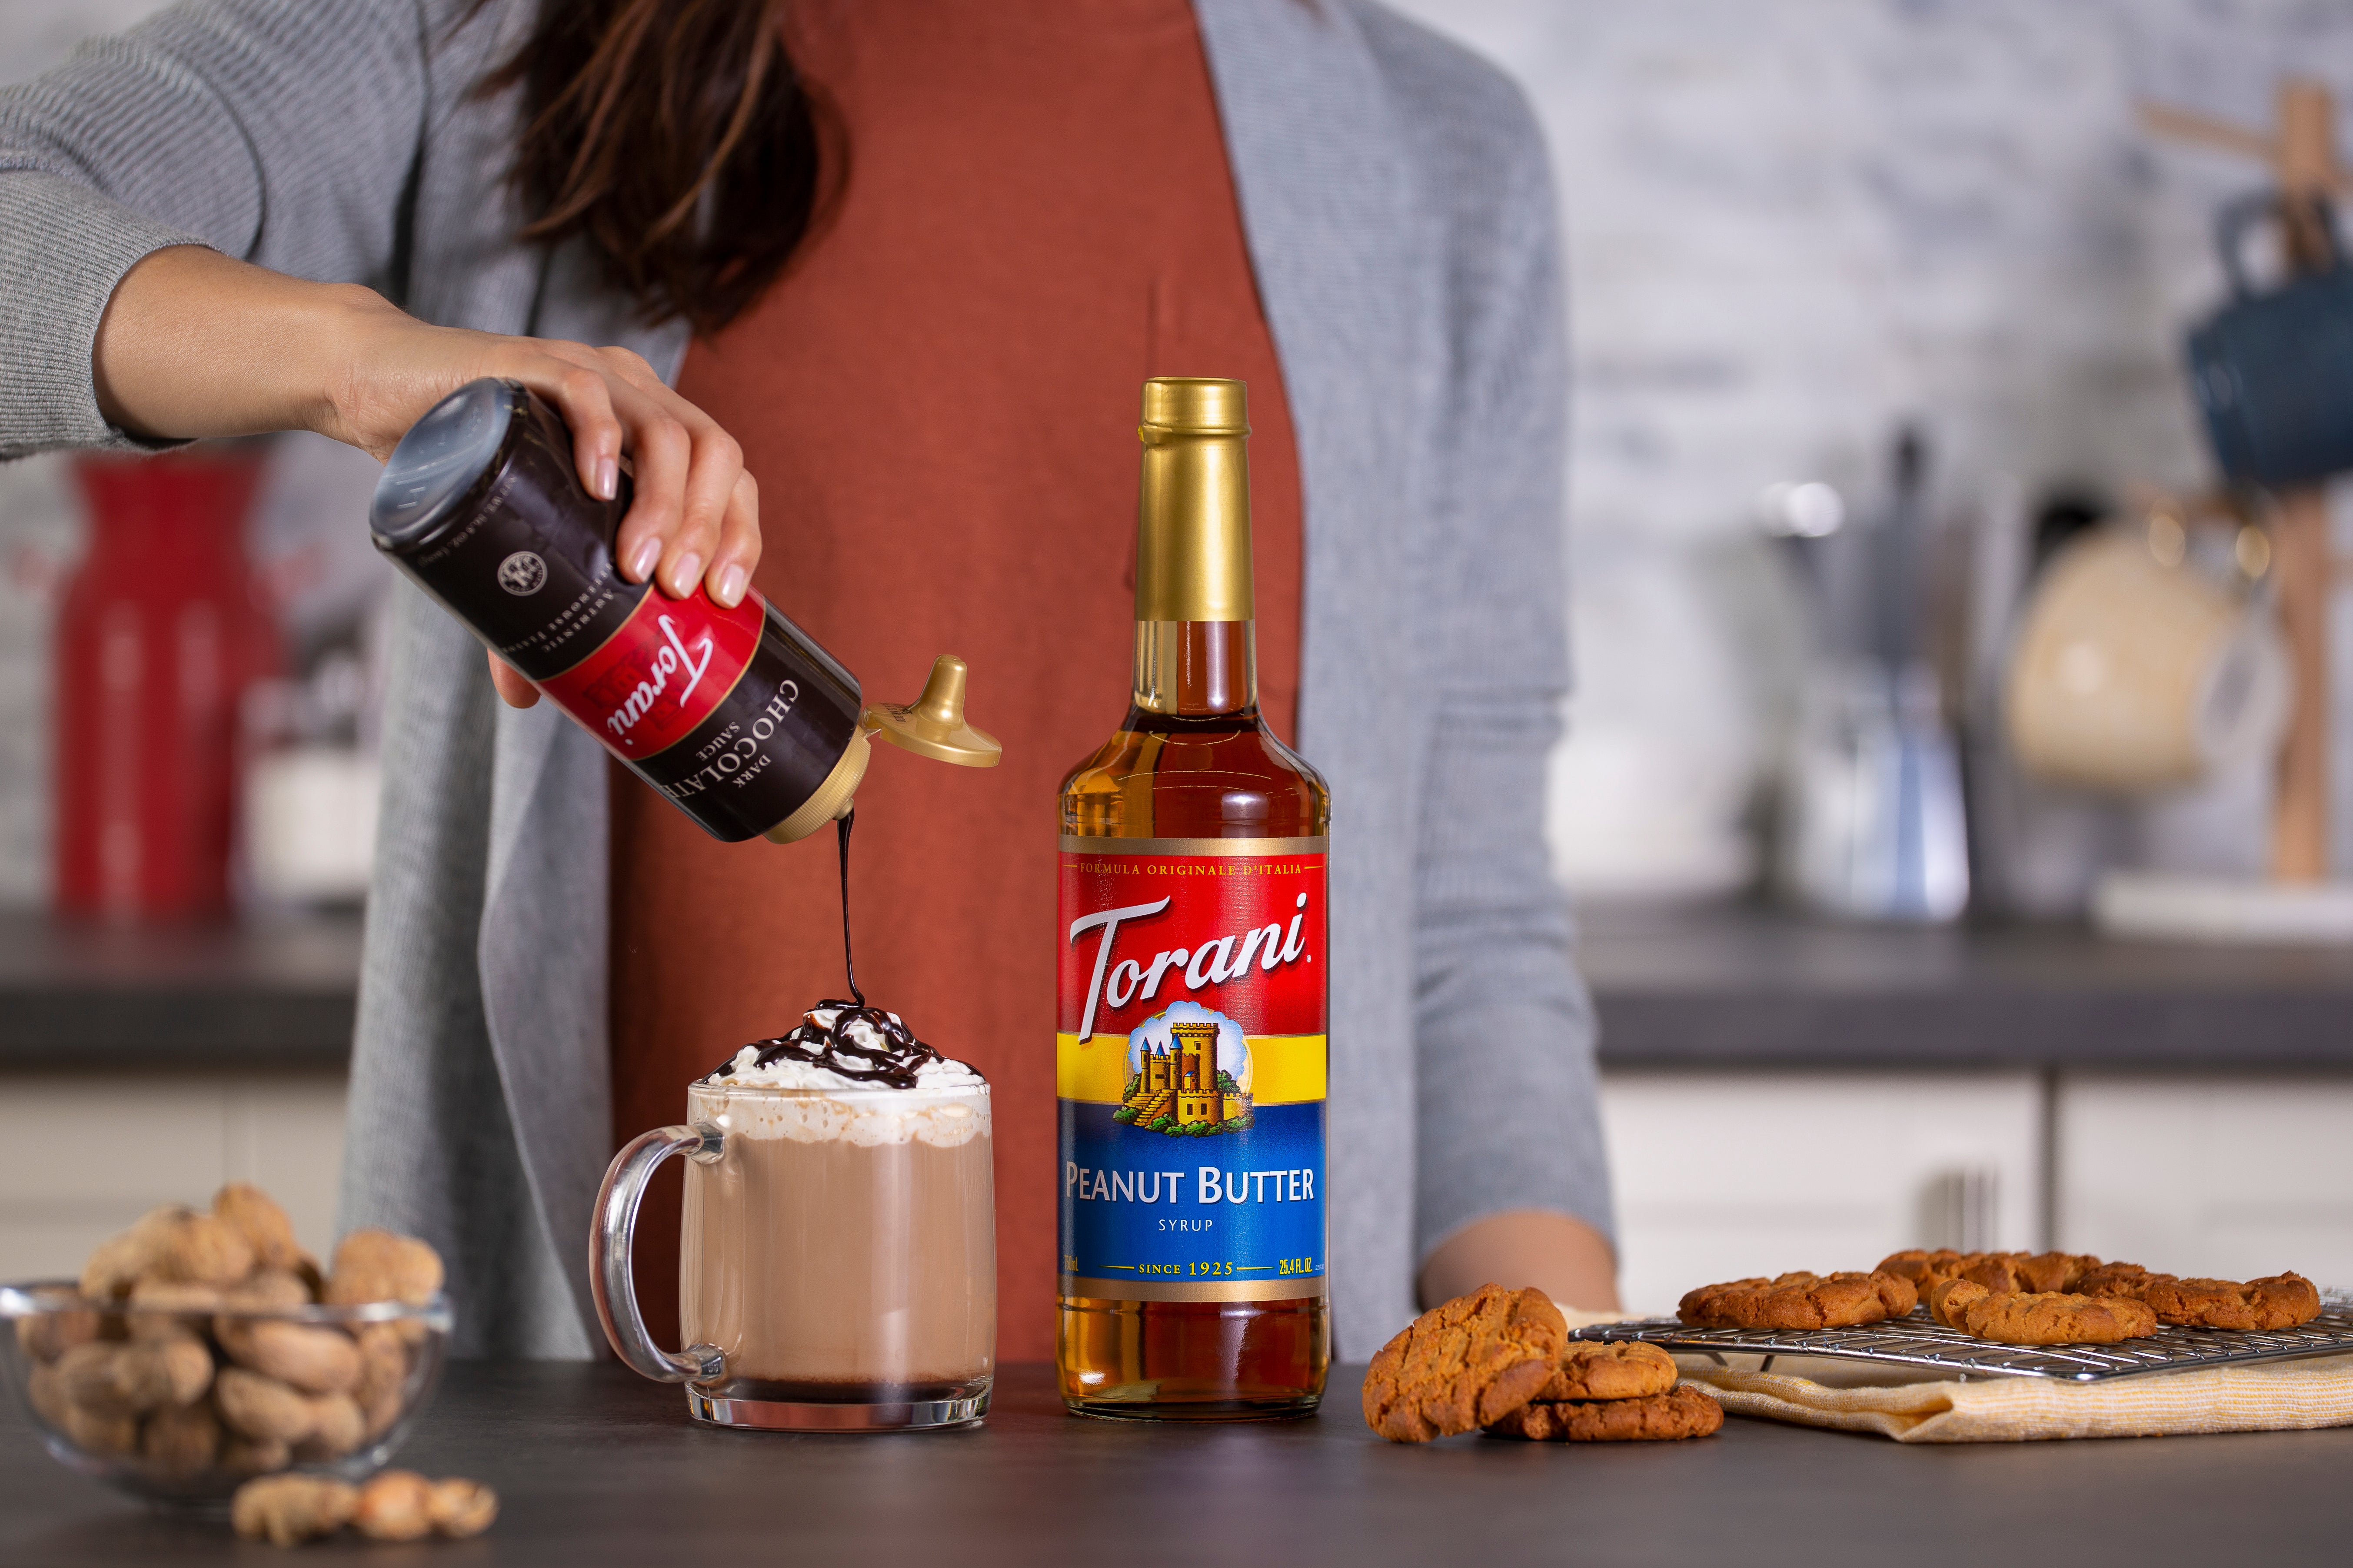 Original Coffee Syrup Favorites Variety 3-Pack – Torani Syrups